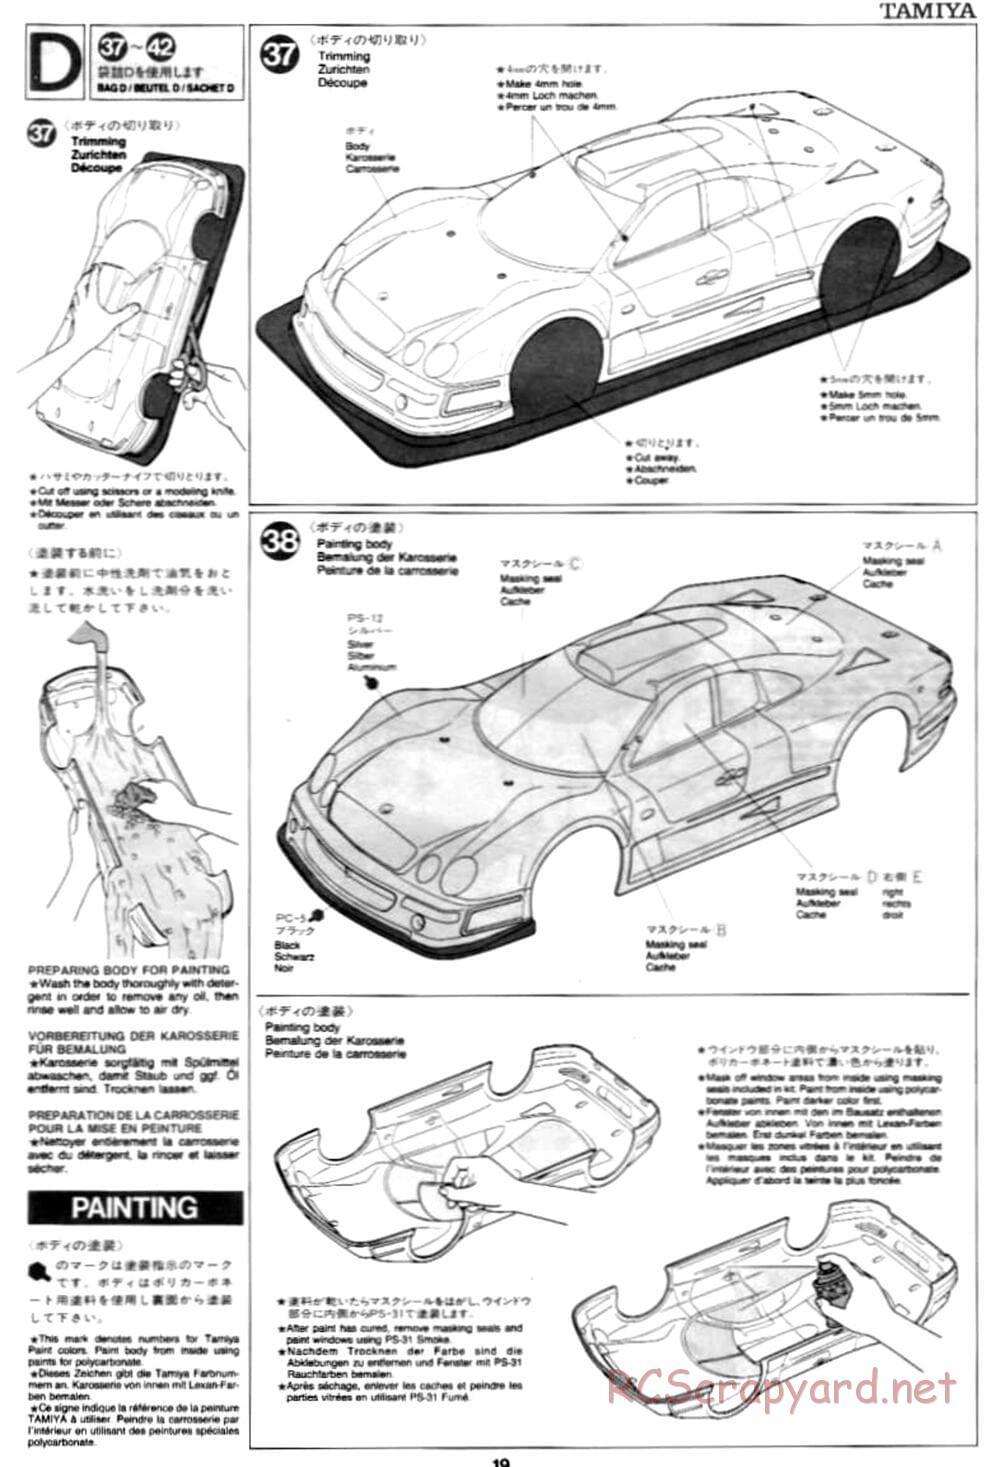 Tamiya - Mercedes CLK-GTR - TA-03R Chassis - Manual - Page 19